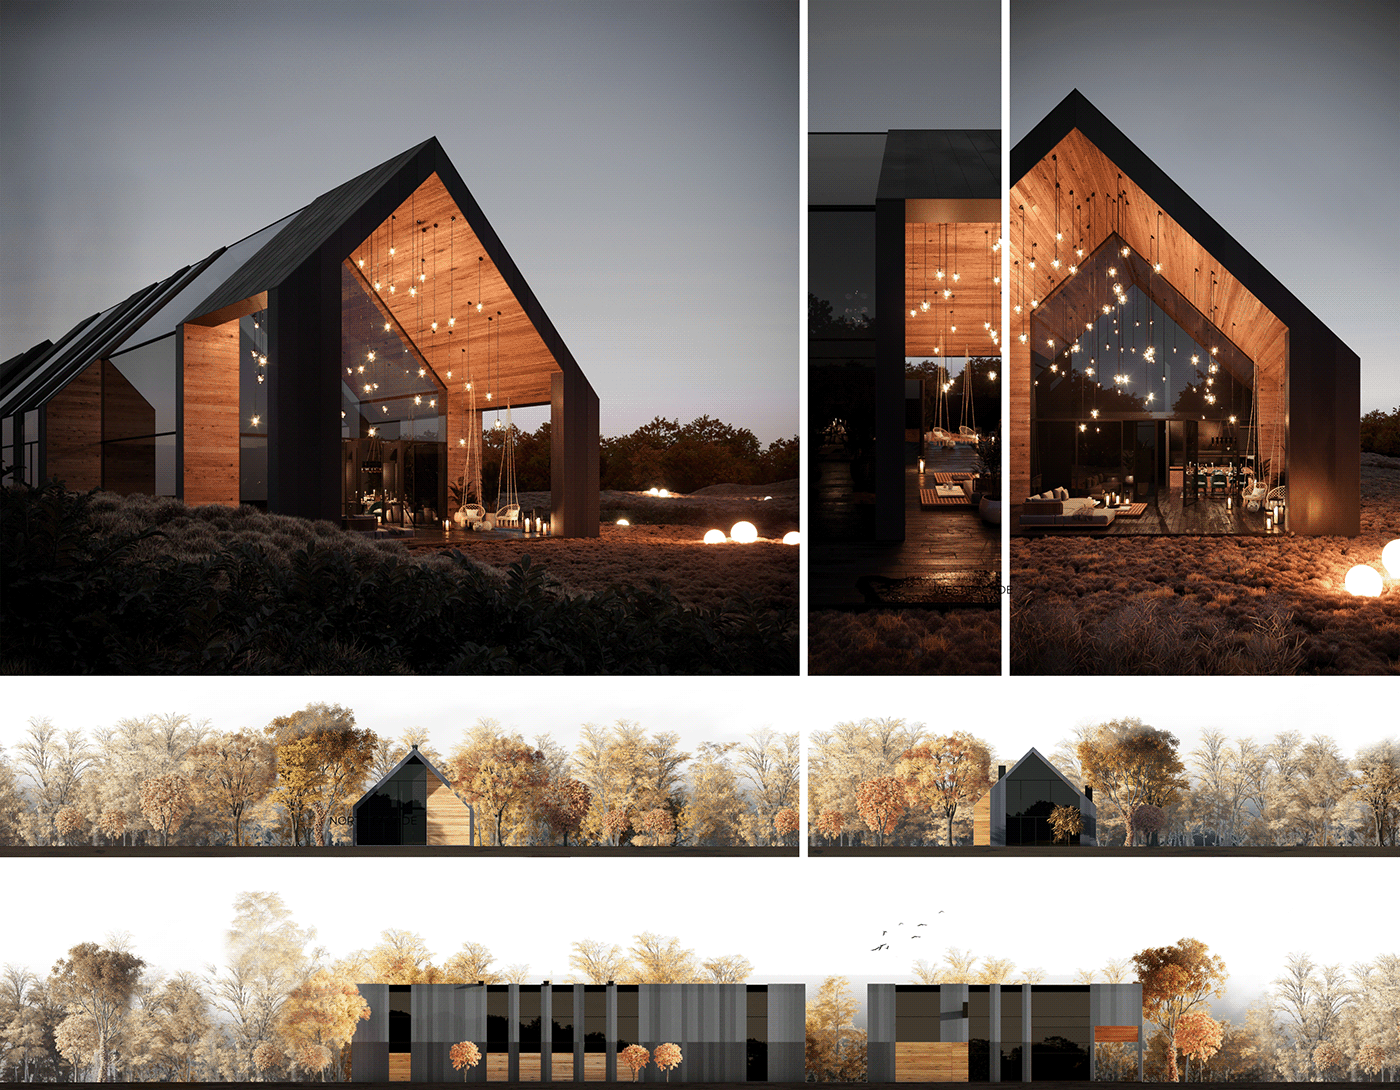 architecture horses house multigenerational Nature stable stud farm village visualisation poland